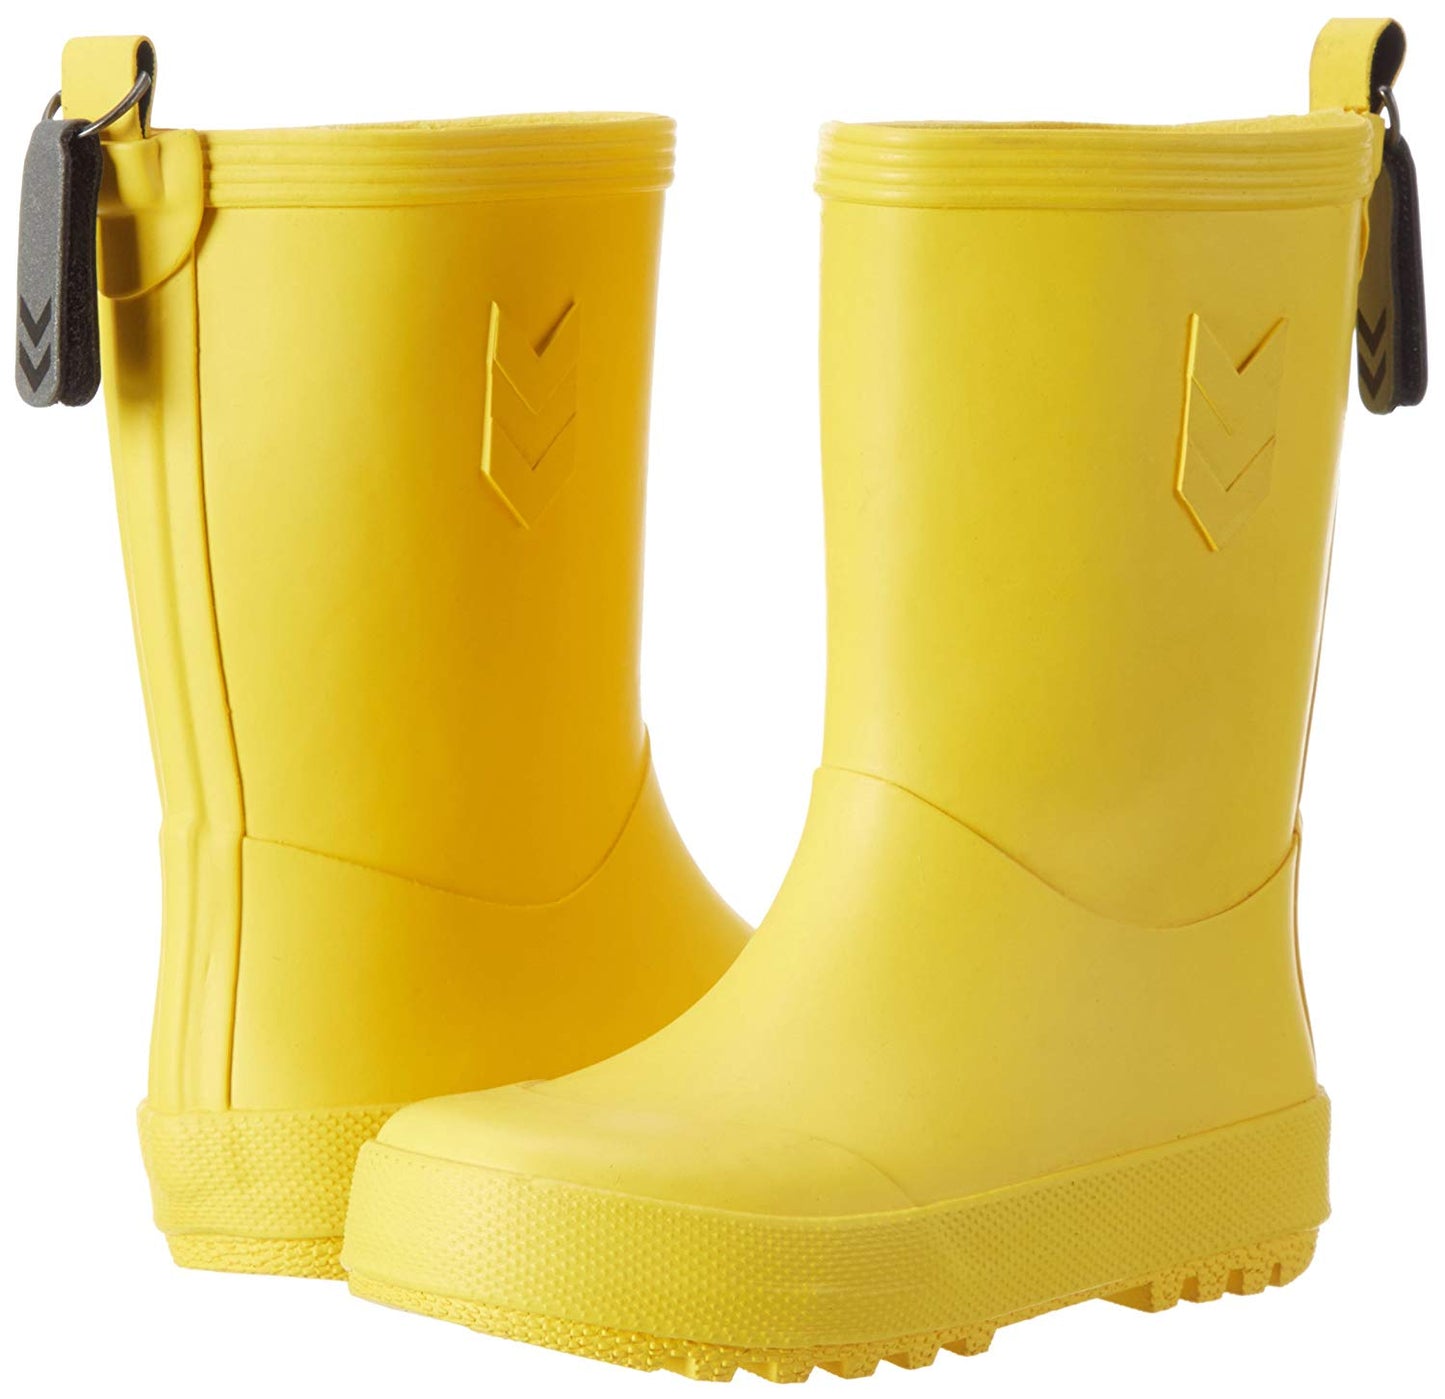 Hummel Yellow Waterproof Rubber Boots